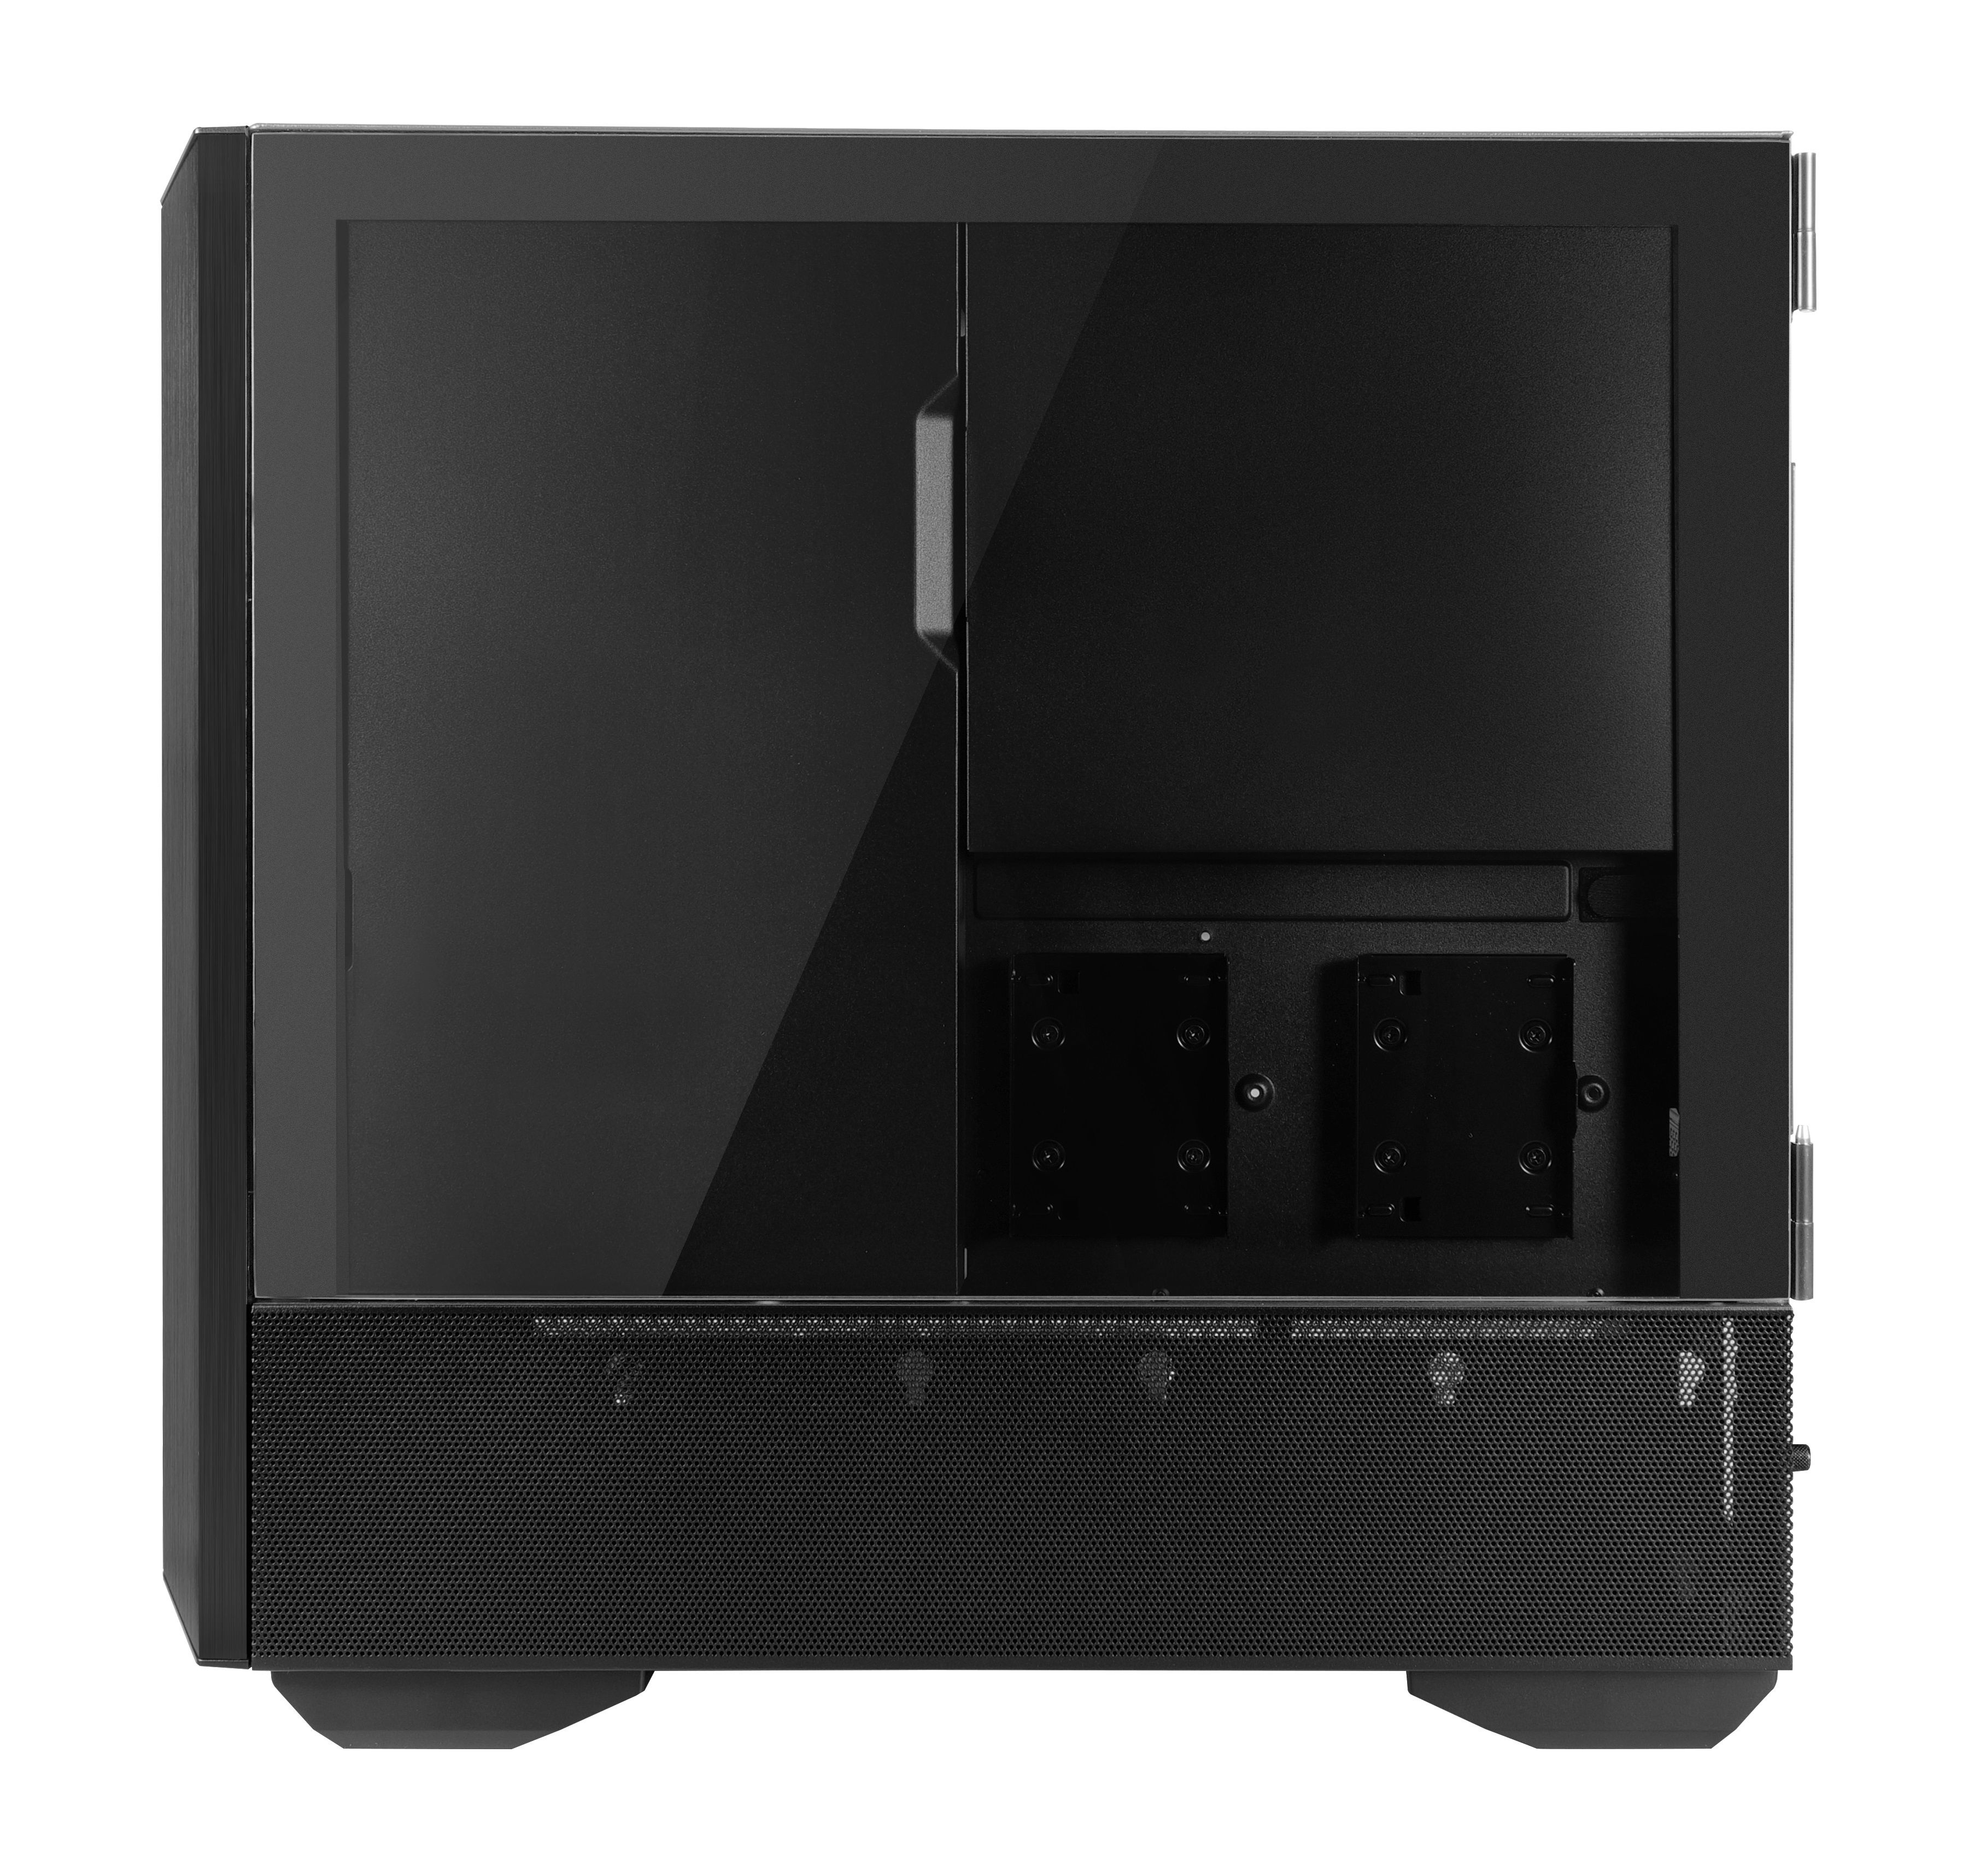 Lian Li - Lian Li Lancool III RGB Full Tower PC Case - Black